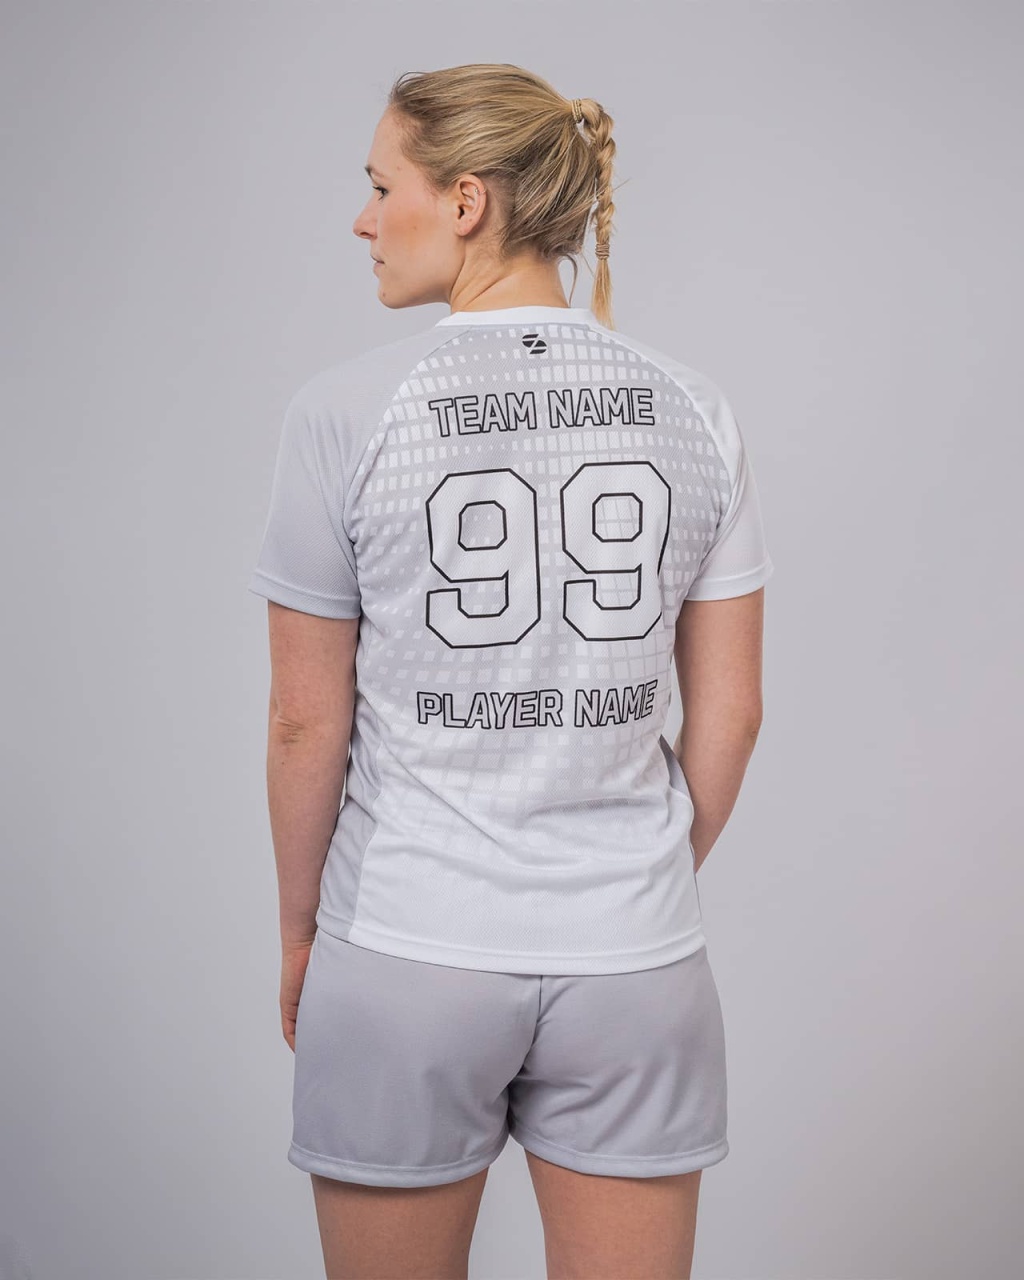 Viborg women's handball jersey